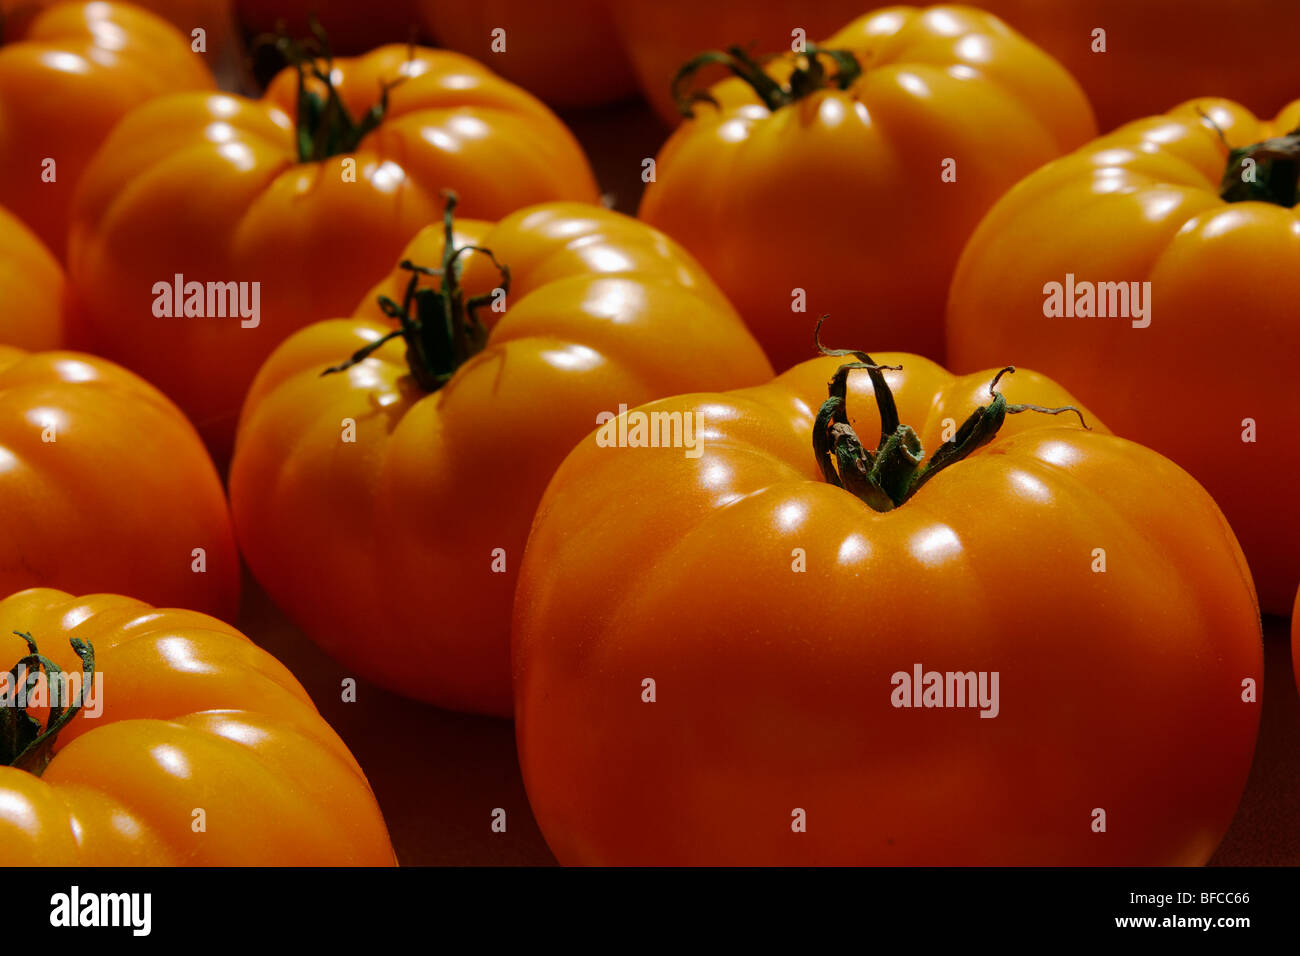 Hothouse tomatoes at a farmers market, Adams Morgan, Washington, DC. Stock Photo